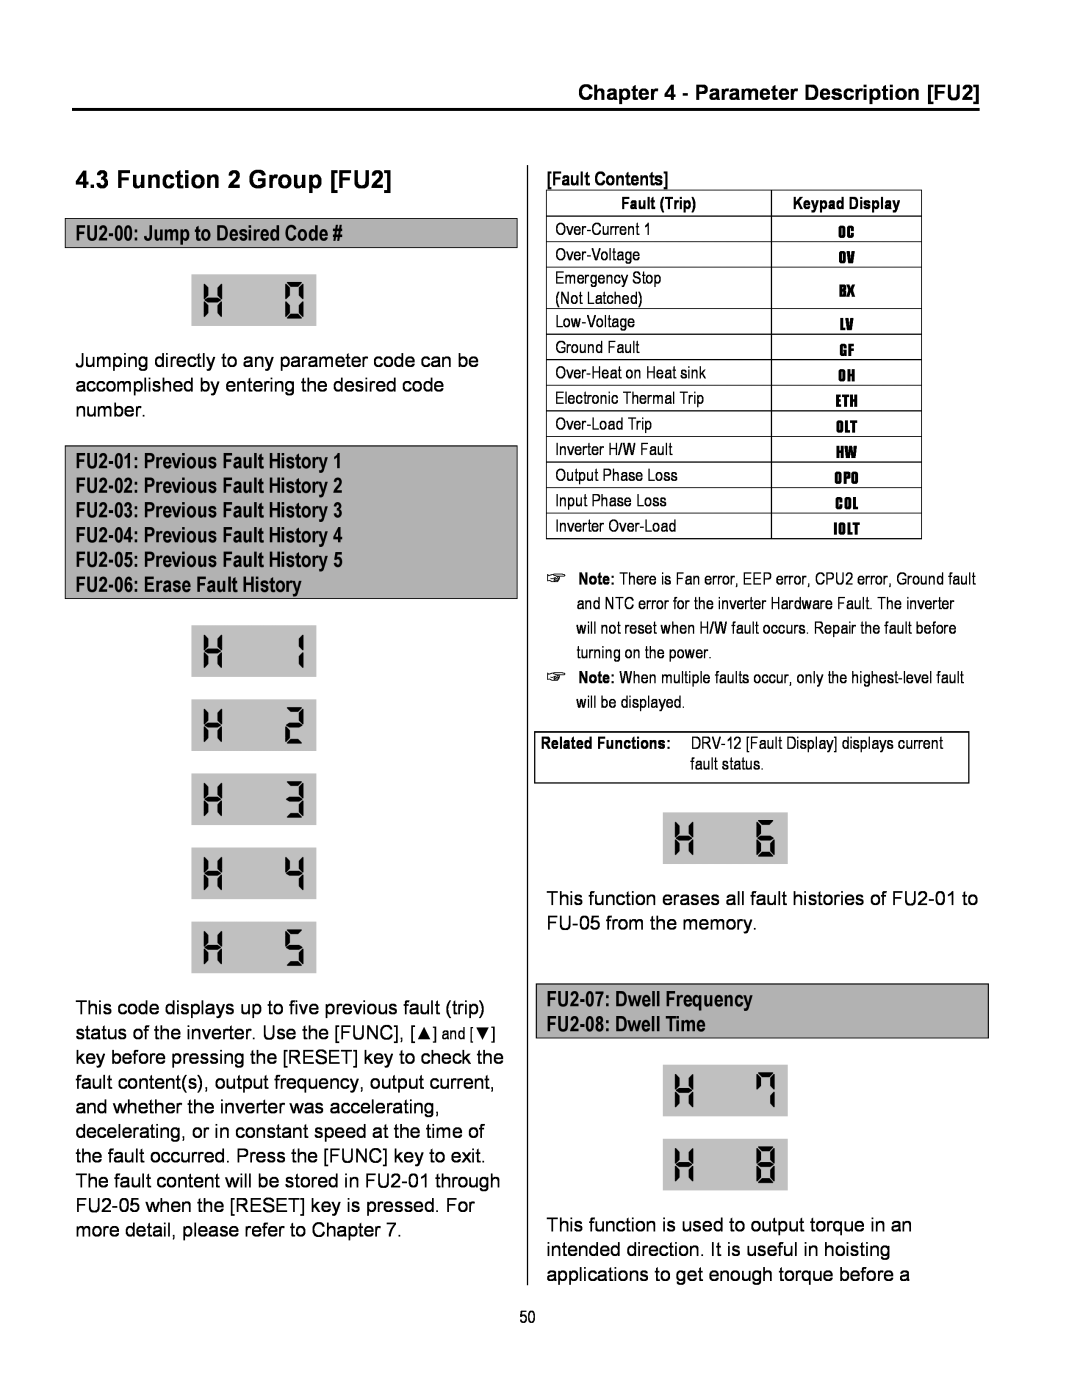 Cleveland Range inverter manual Function 2 Group FU2, Parameter Description FU2, FU2-00 Jump to Desired Code # 